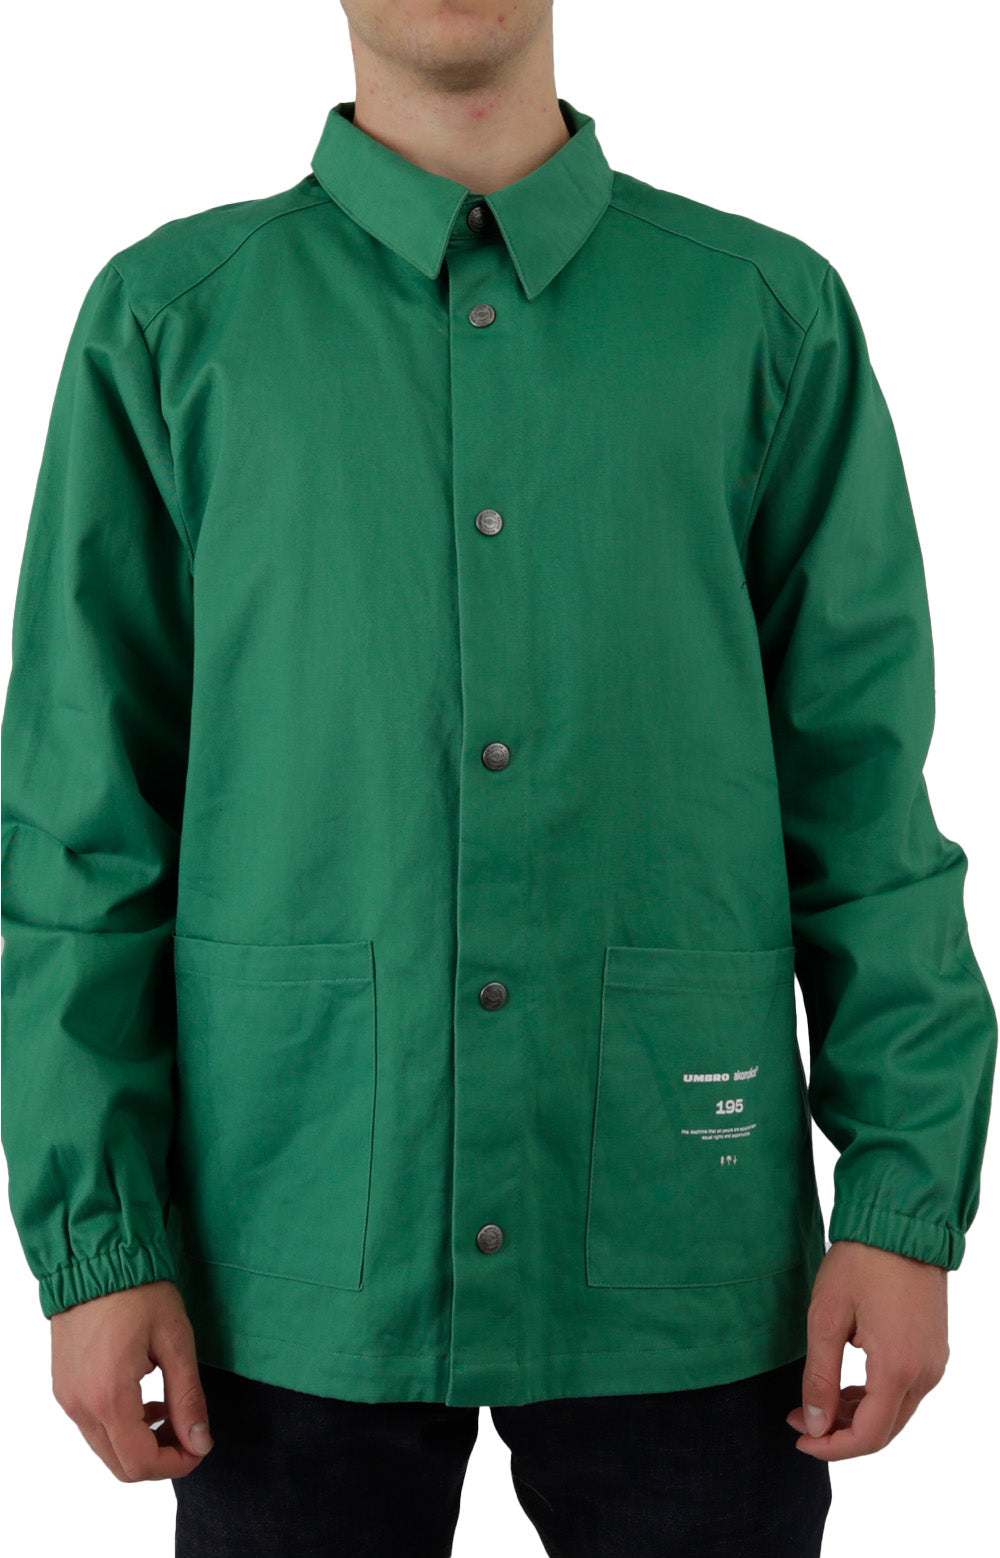 x Umbro Dove Coaches Jacket - Amazon Green